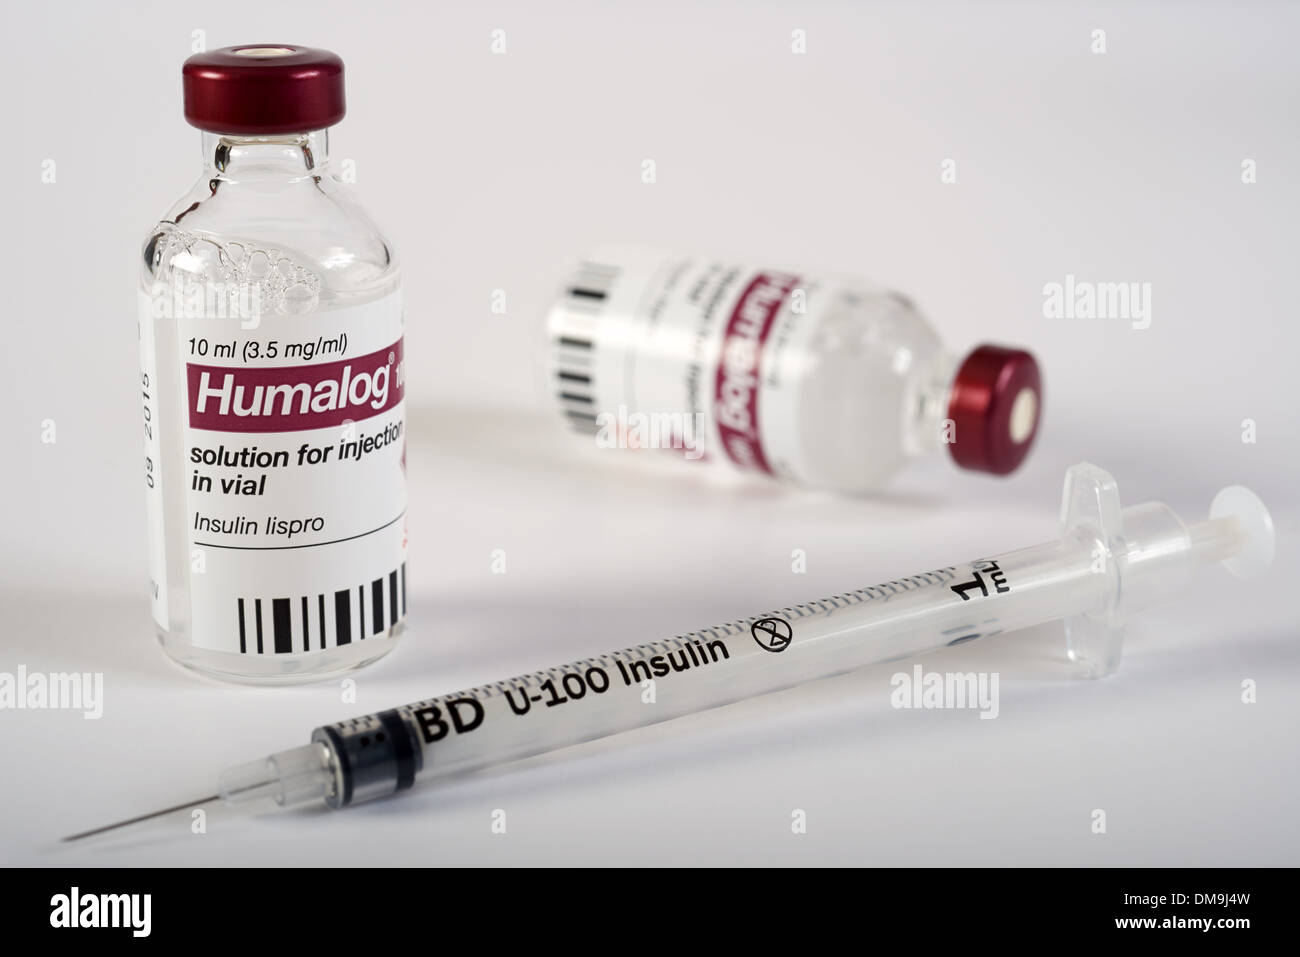 Humalog insulin lispro 10 ml bottles Stock Photo